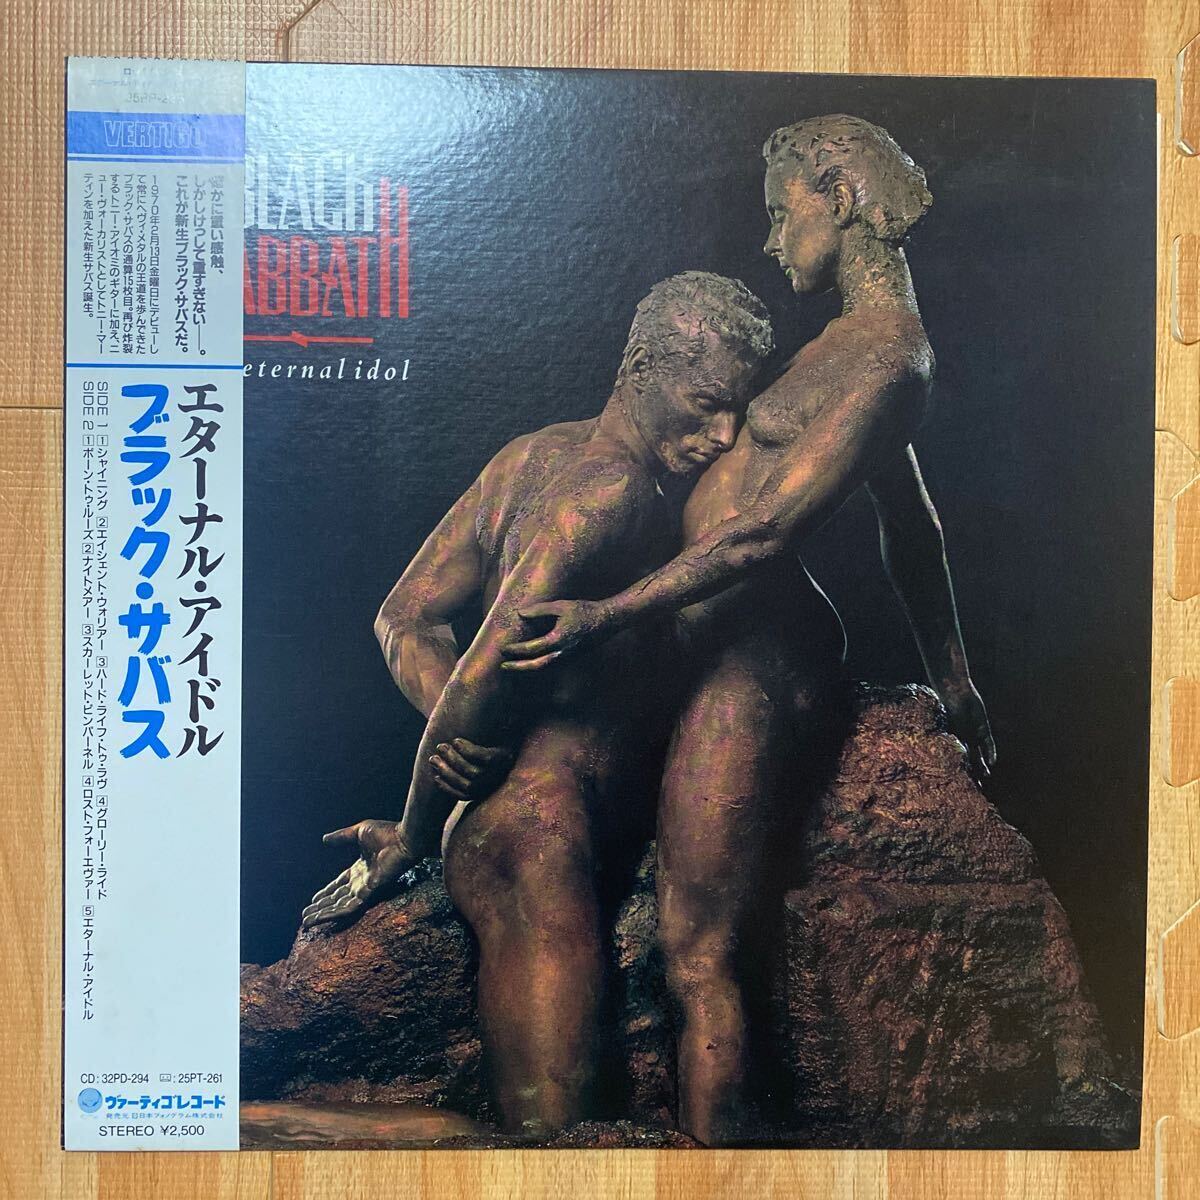 Black Sabbath The Eternal Idol ブラック・サバス エターナル・アイドル 25PP-225 レコード LP 帯付き OBI_画像1